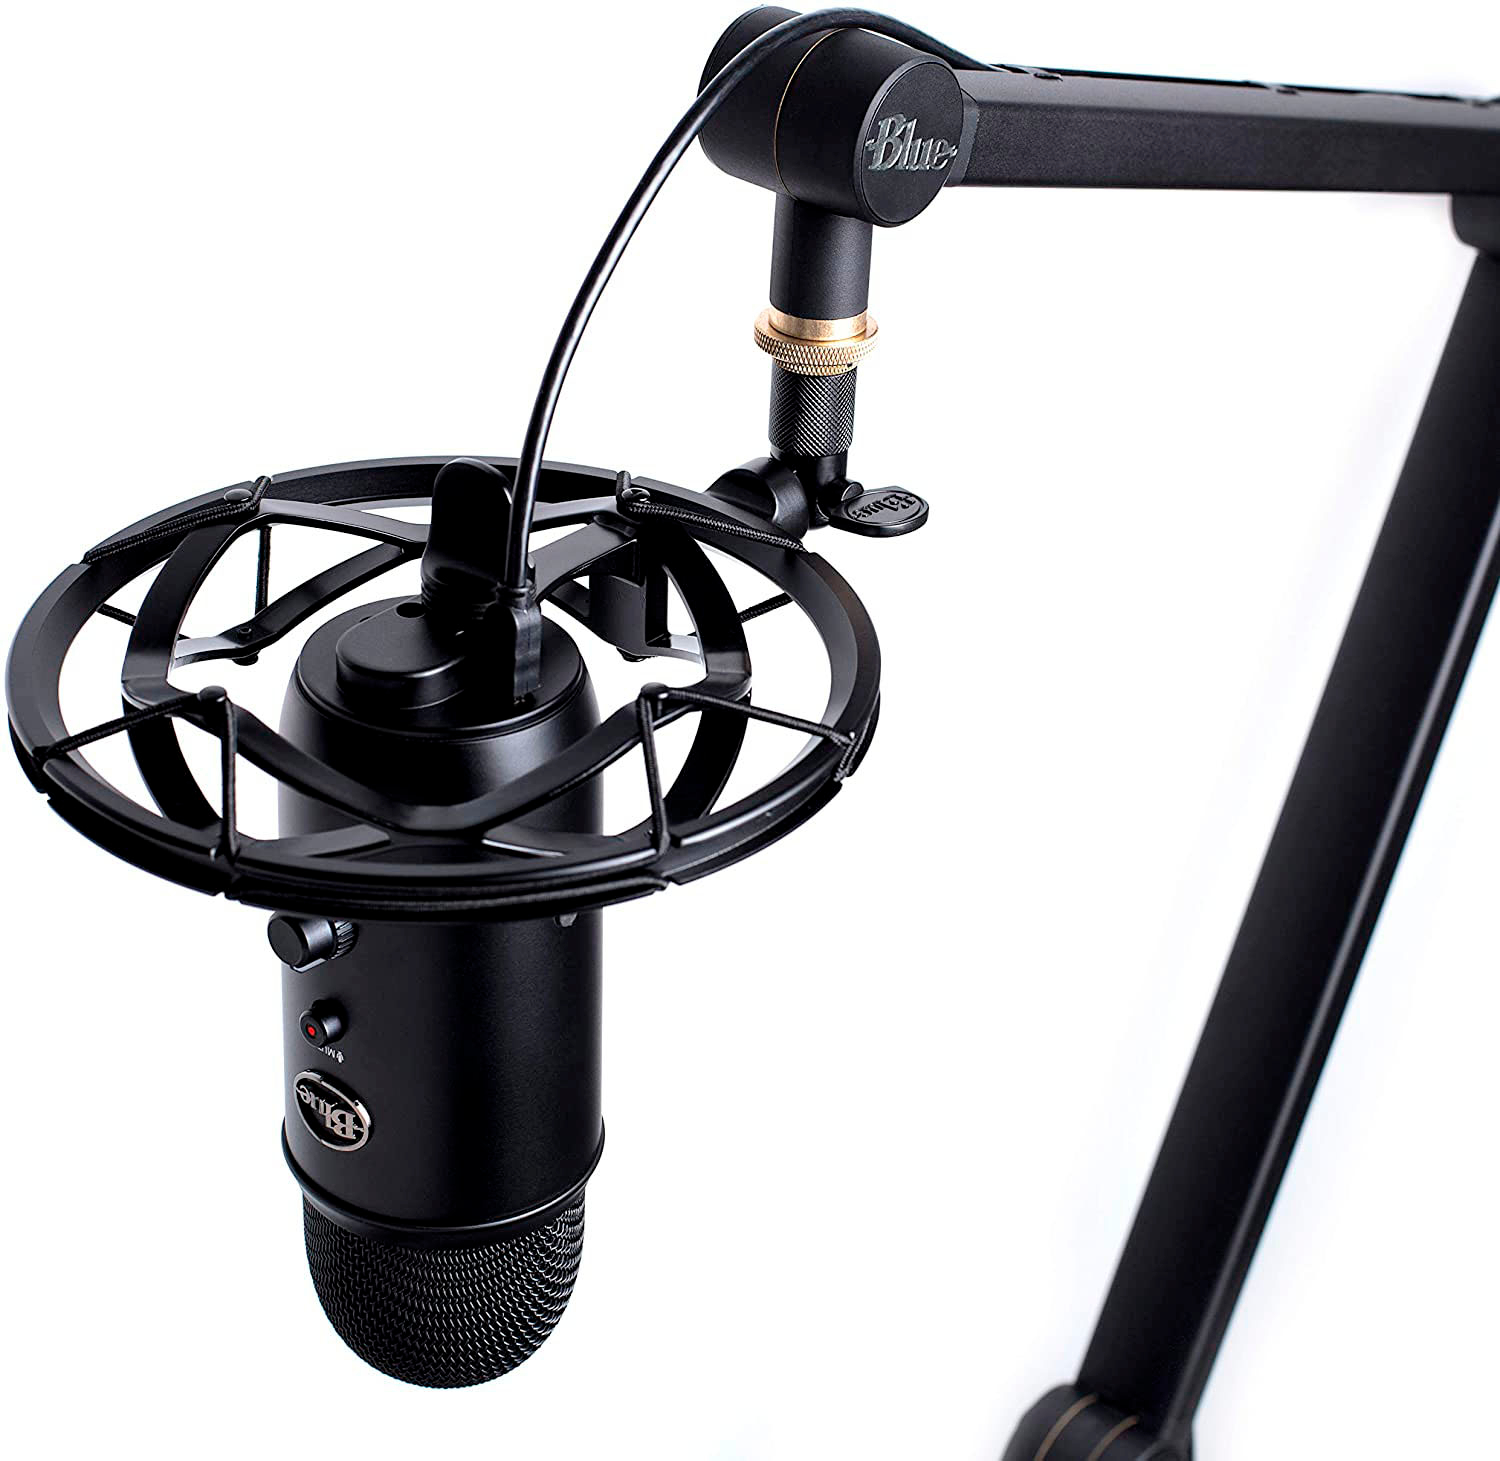 Logitech Compass Microphone Stand 989-000517 - Best Buy